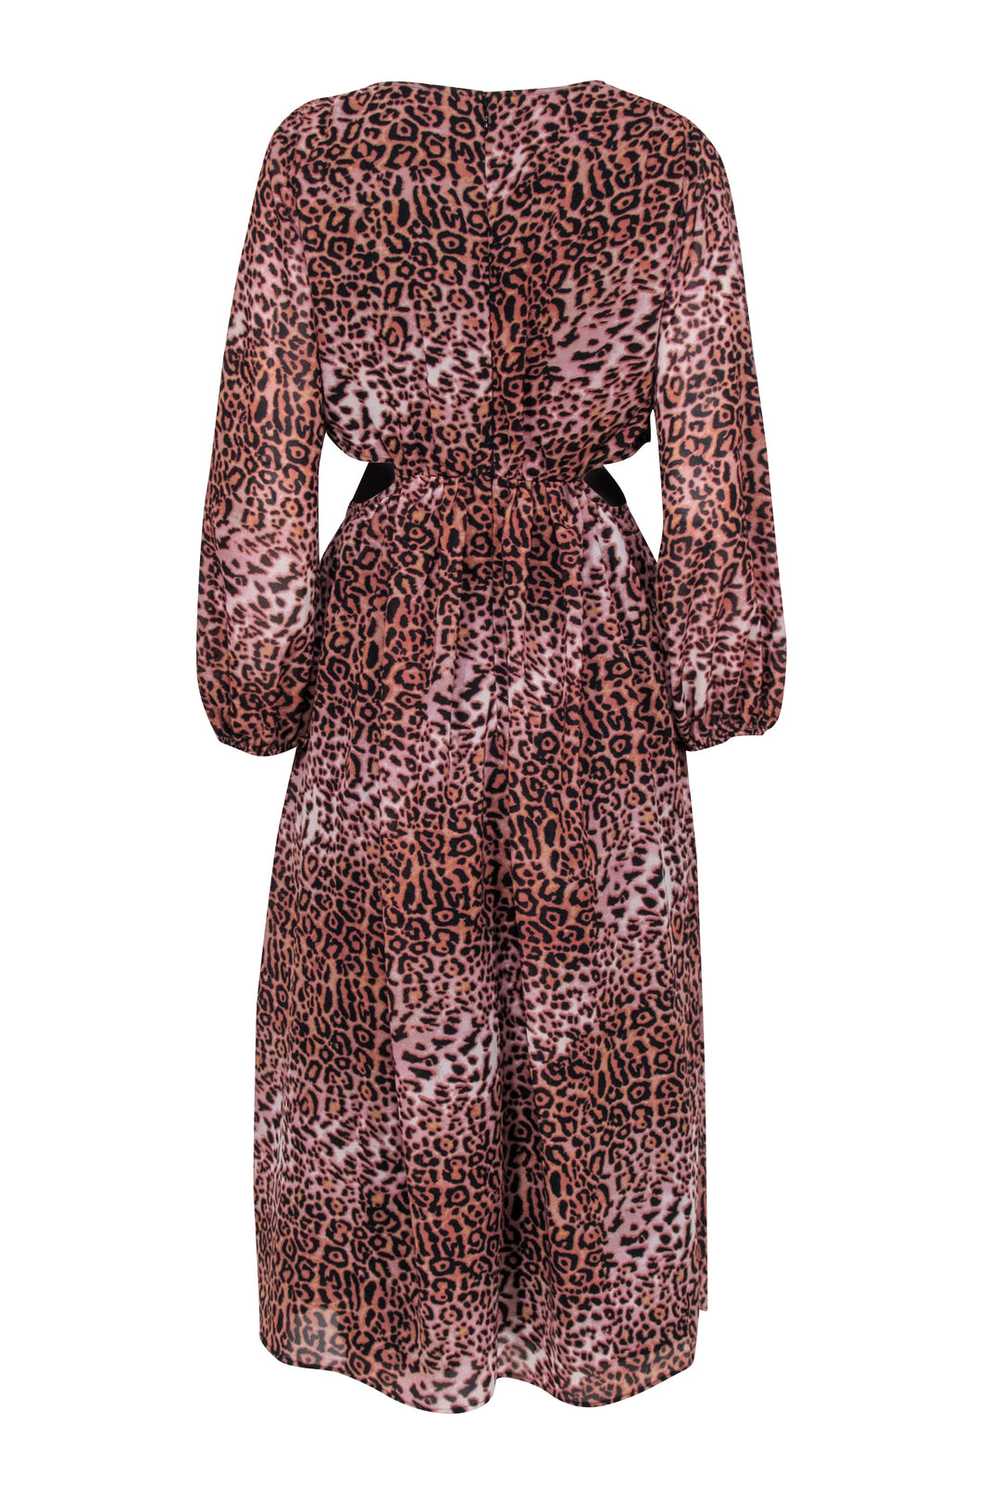 Ranna Gill x Anthropologie - Tan & Blush Leopard … - image 3